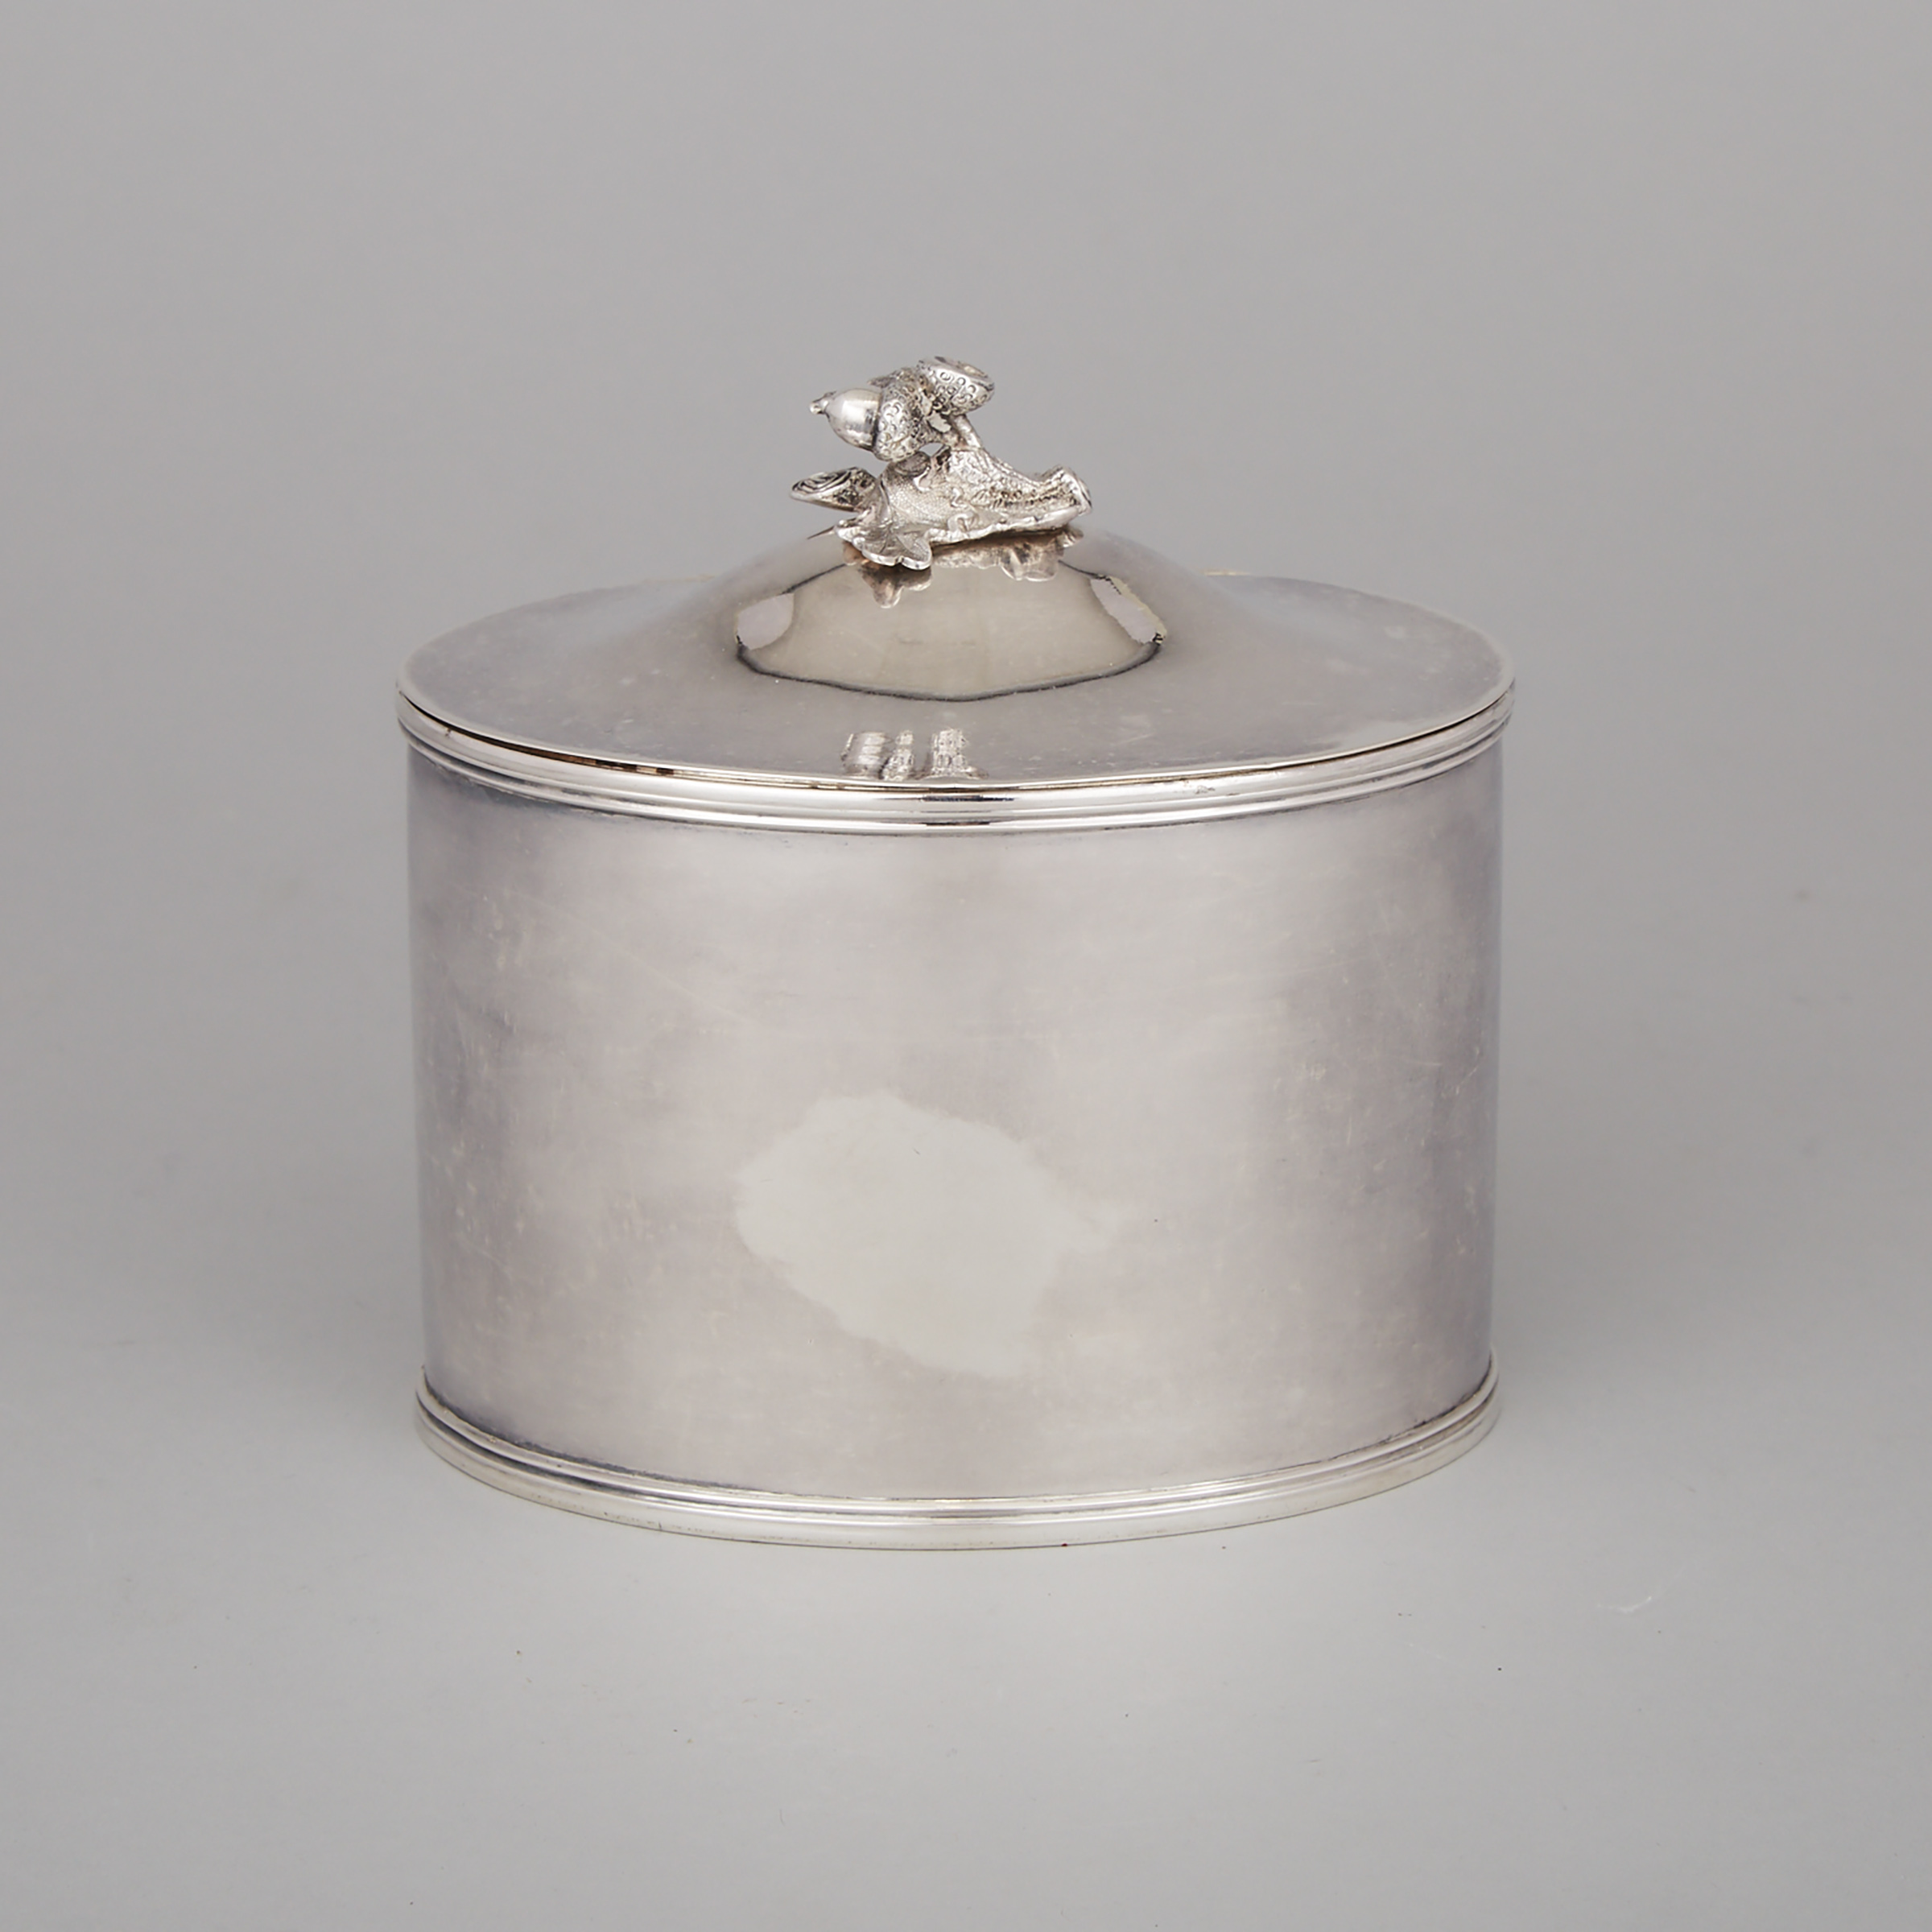 American Silver Tea Caddy, Jones Ball & Co., Boston, Mass., 1853-55